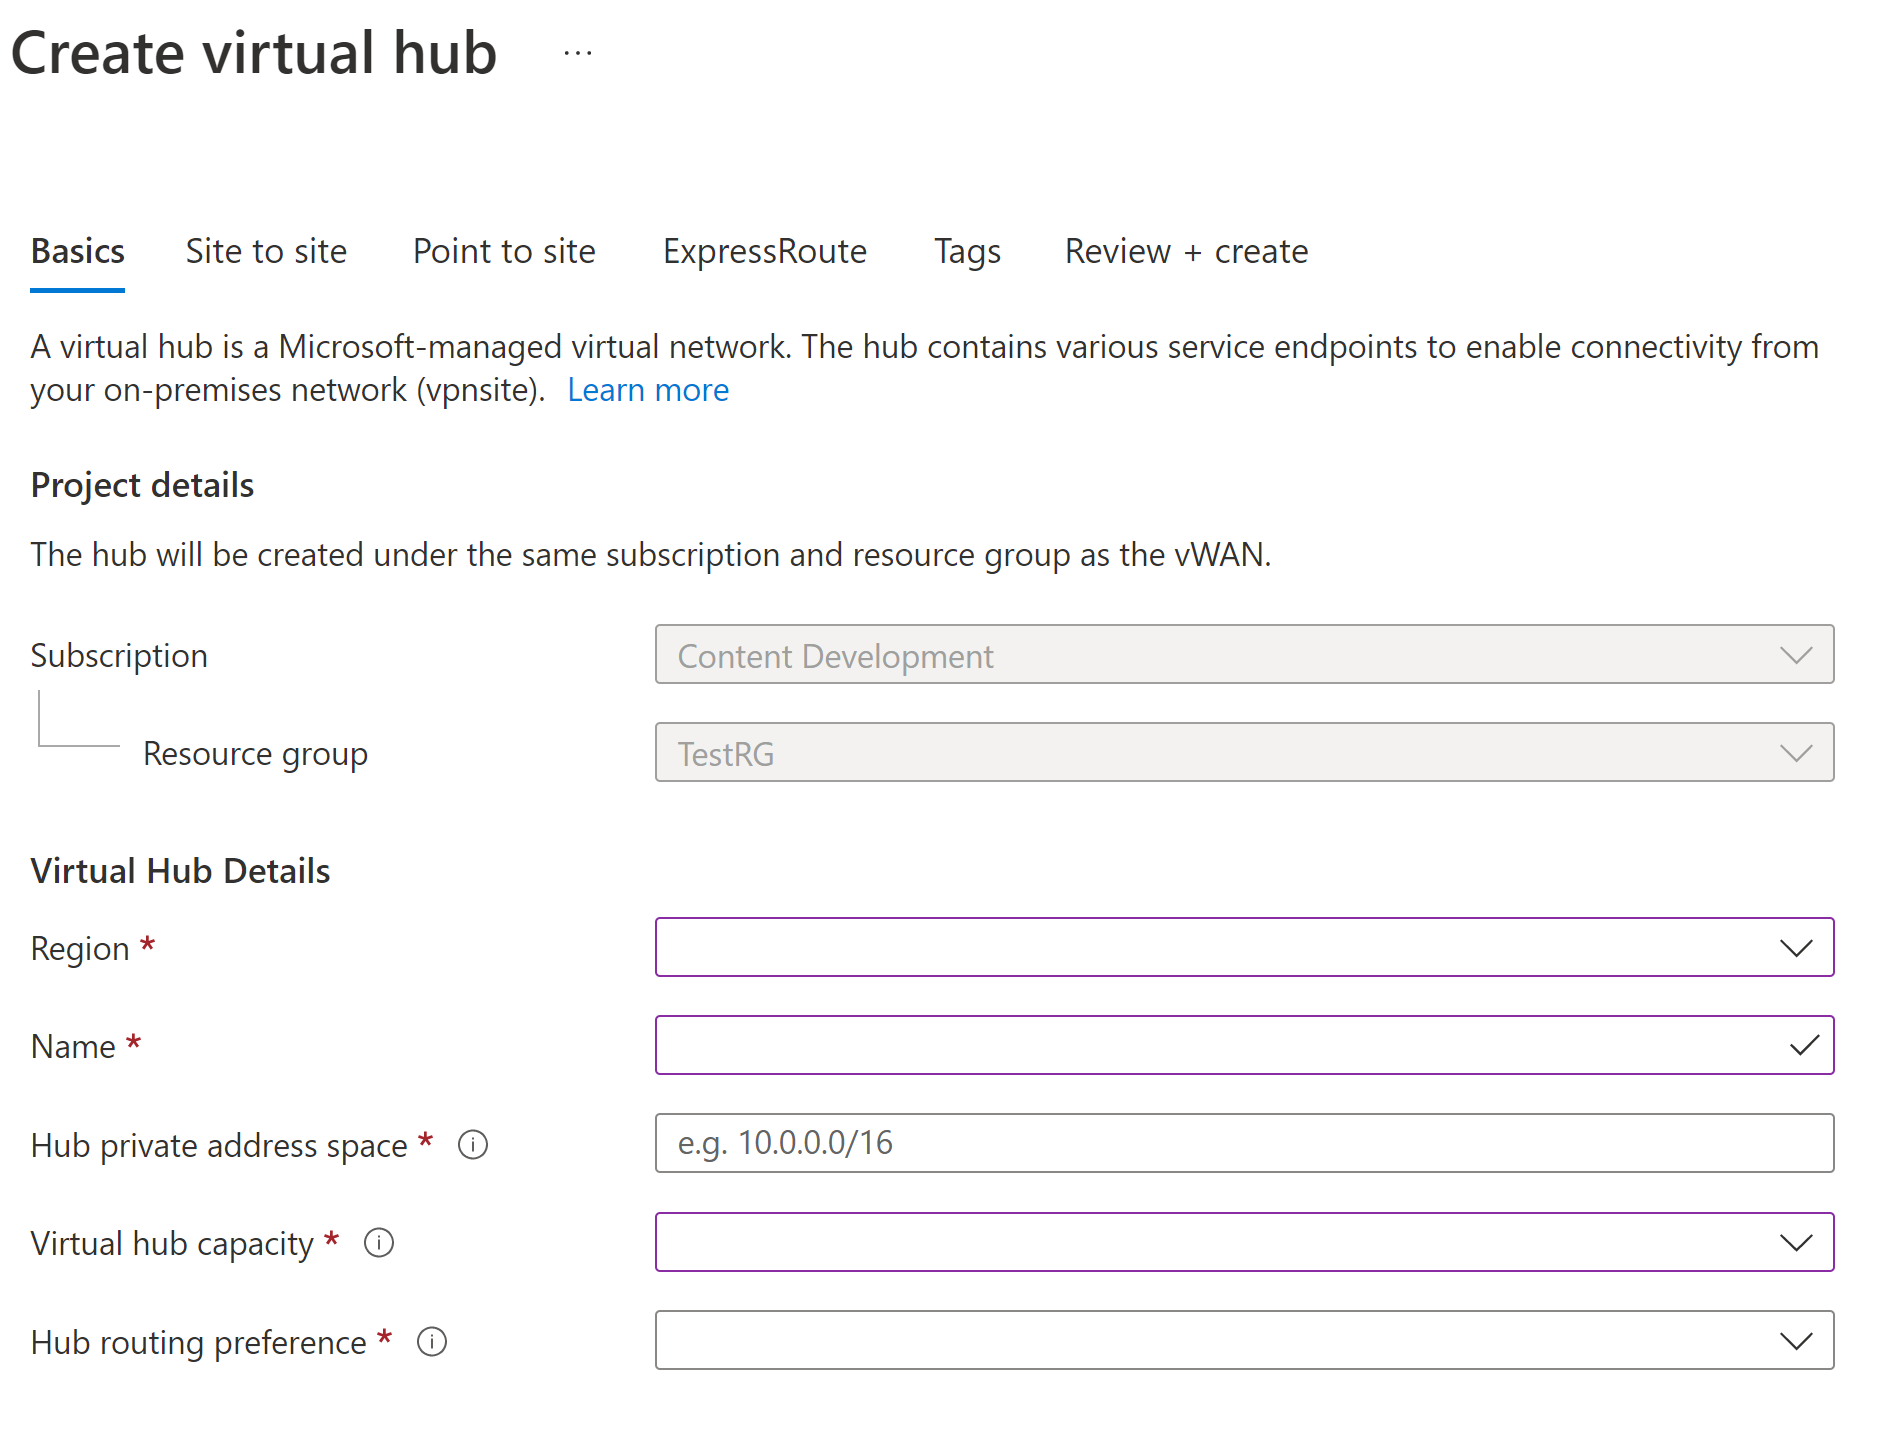 Screenshot shows the Create virtual hub pane where you can enter values.